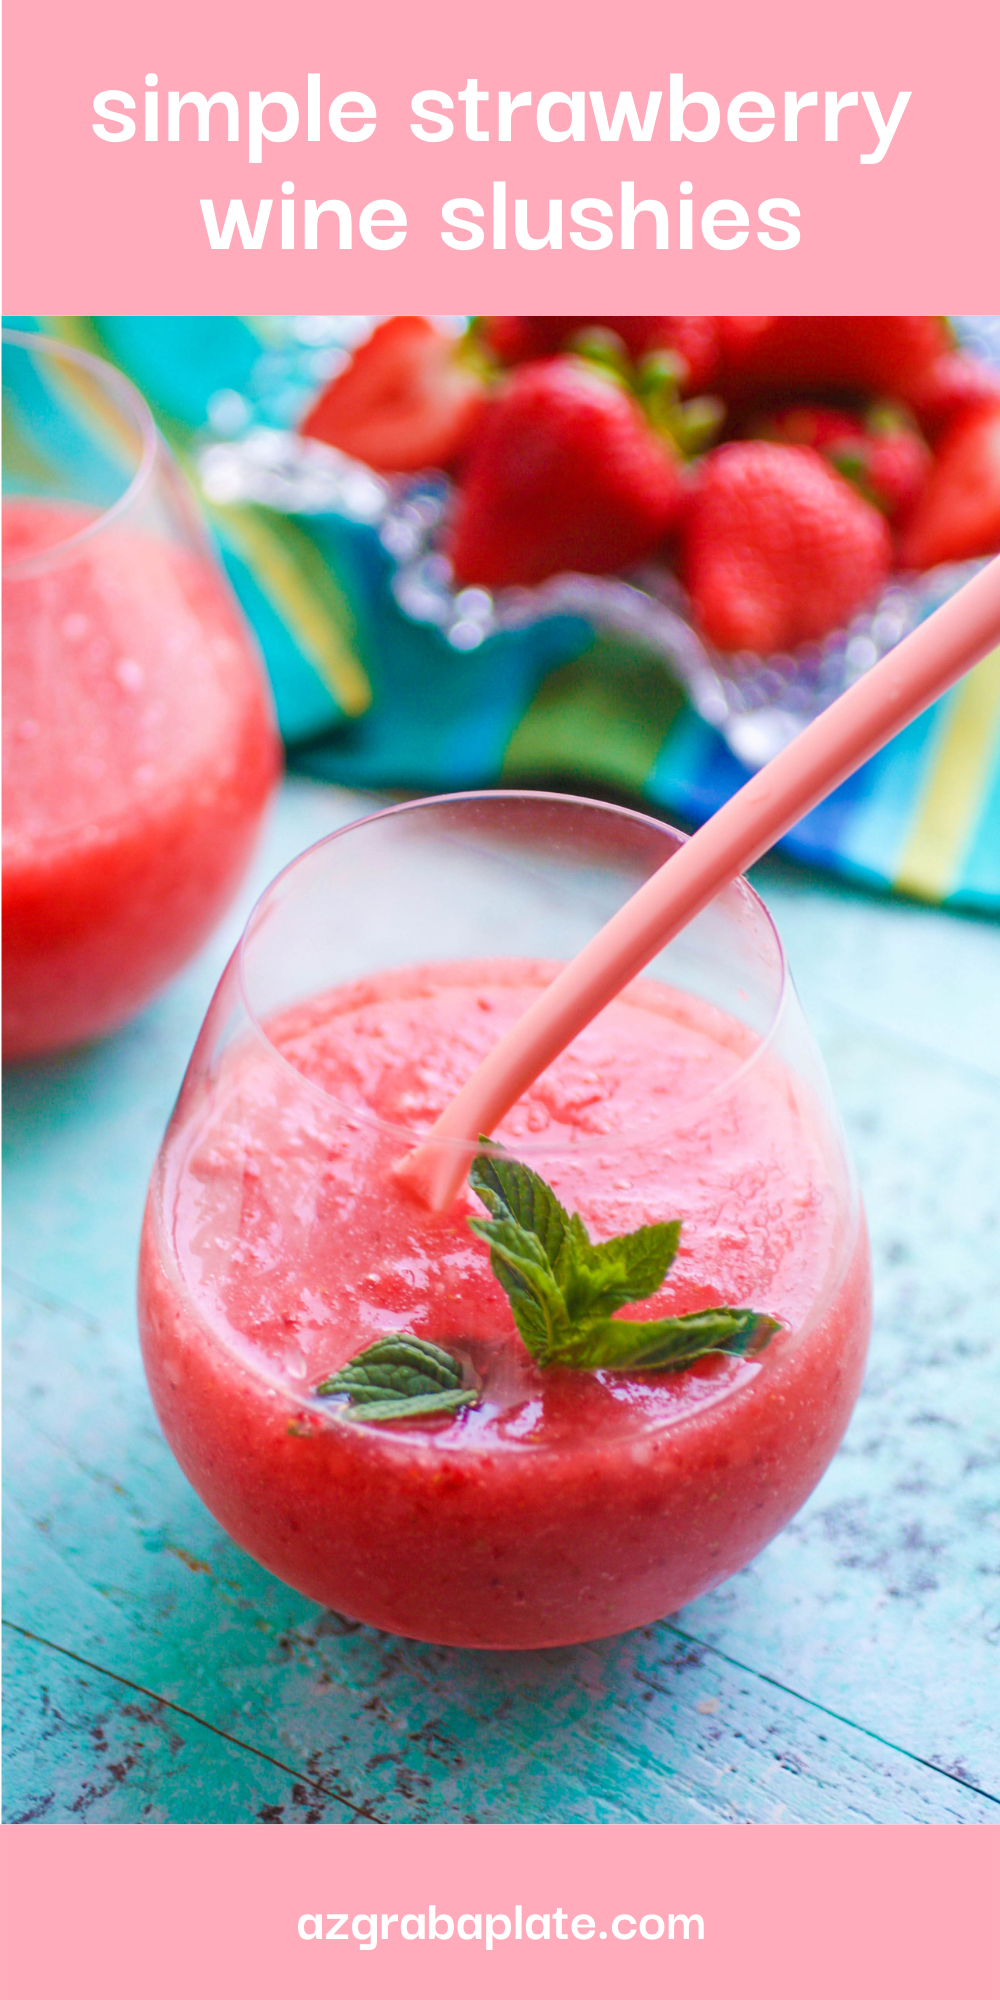 Simple Strawberry Wine Slushies will help beat the summer heat!